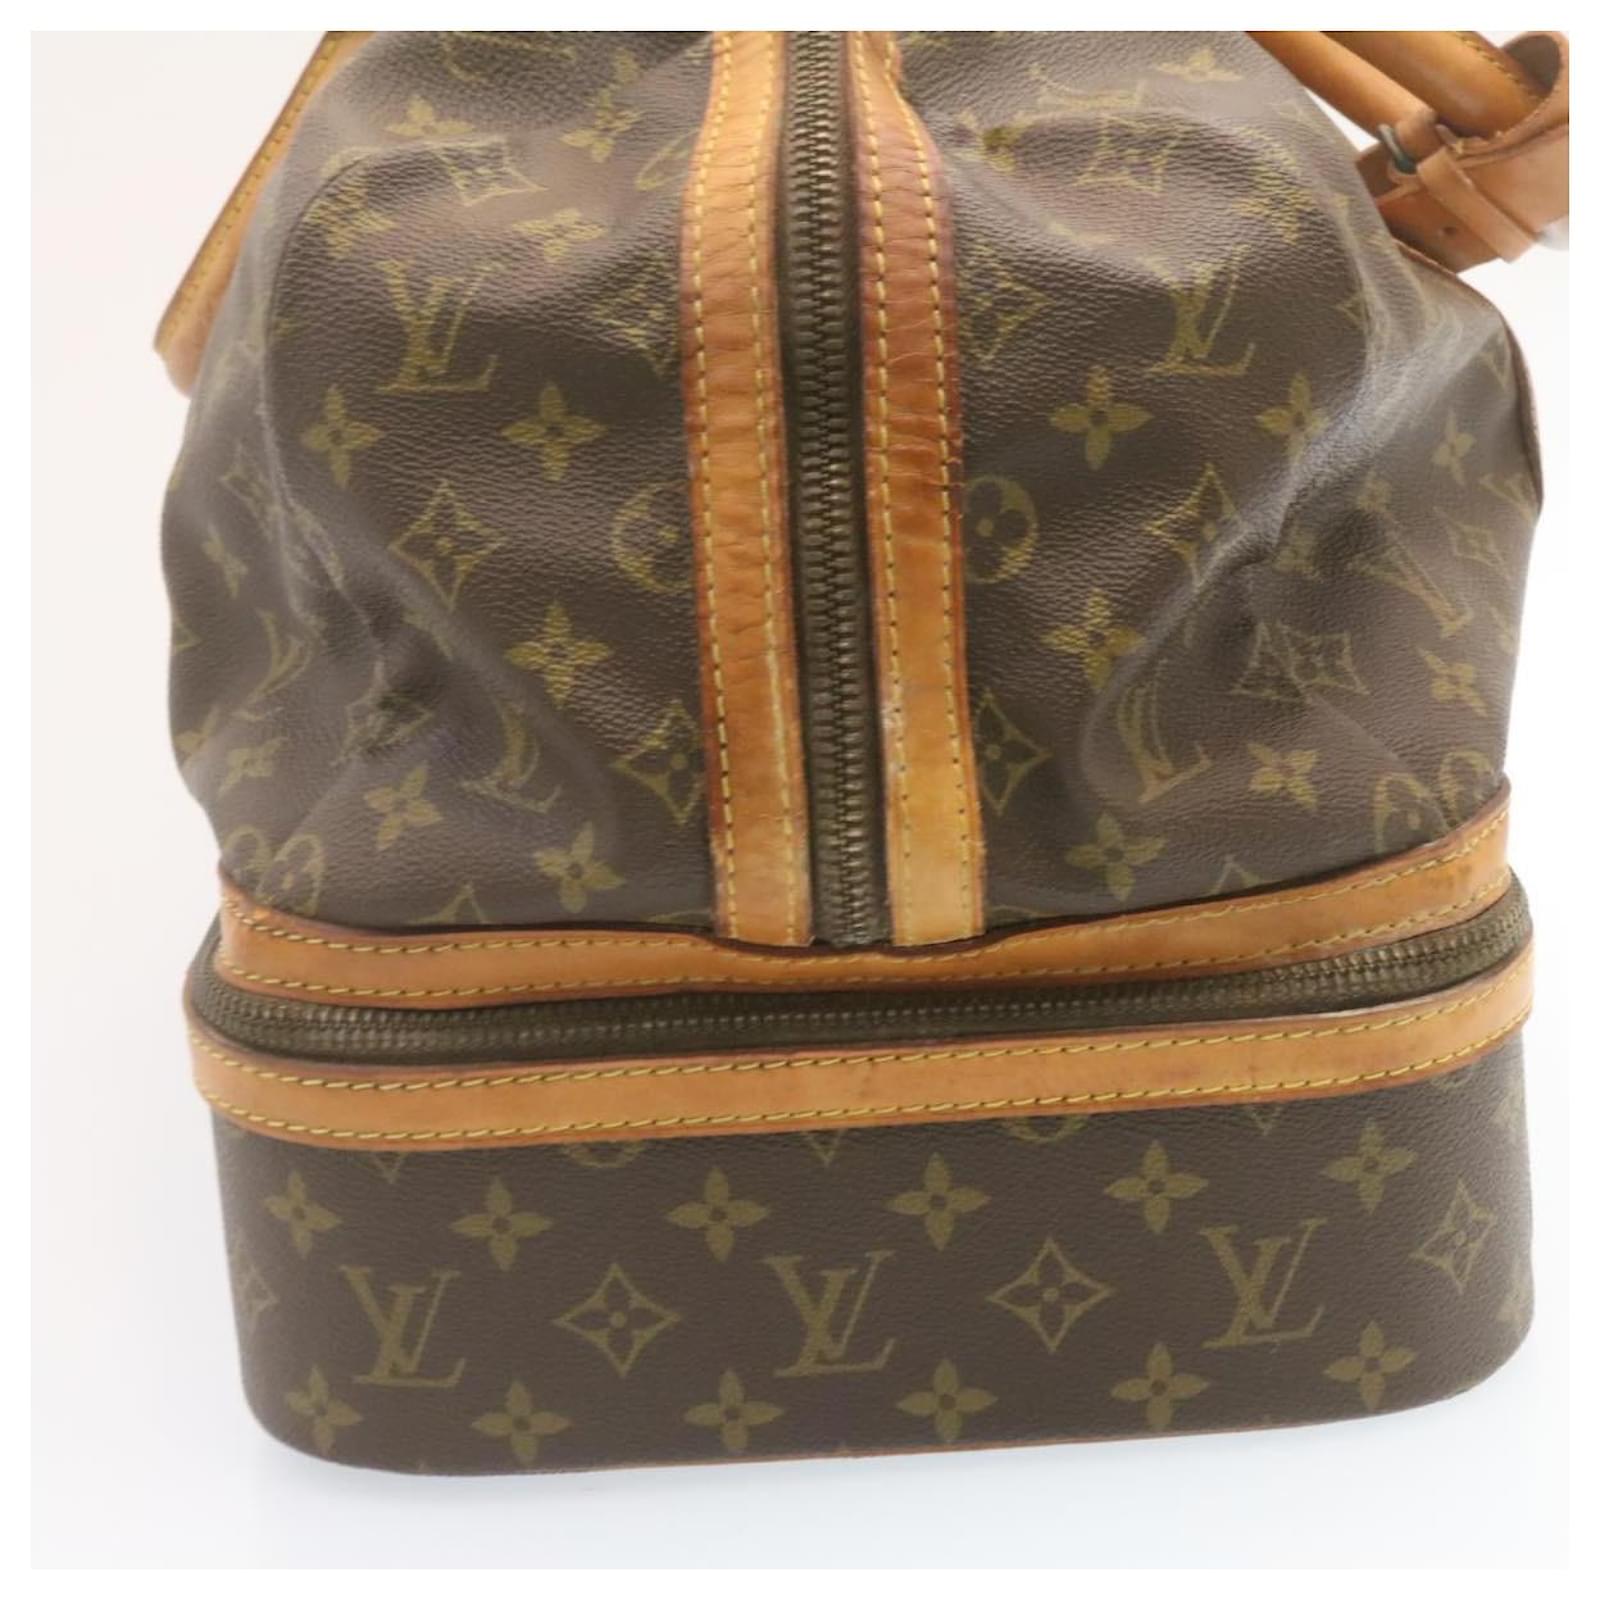 Authentic Louis Vuitton Monogram Sac Sport Travel Hand Bag M41444